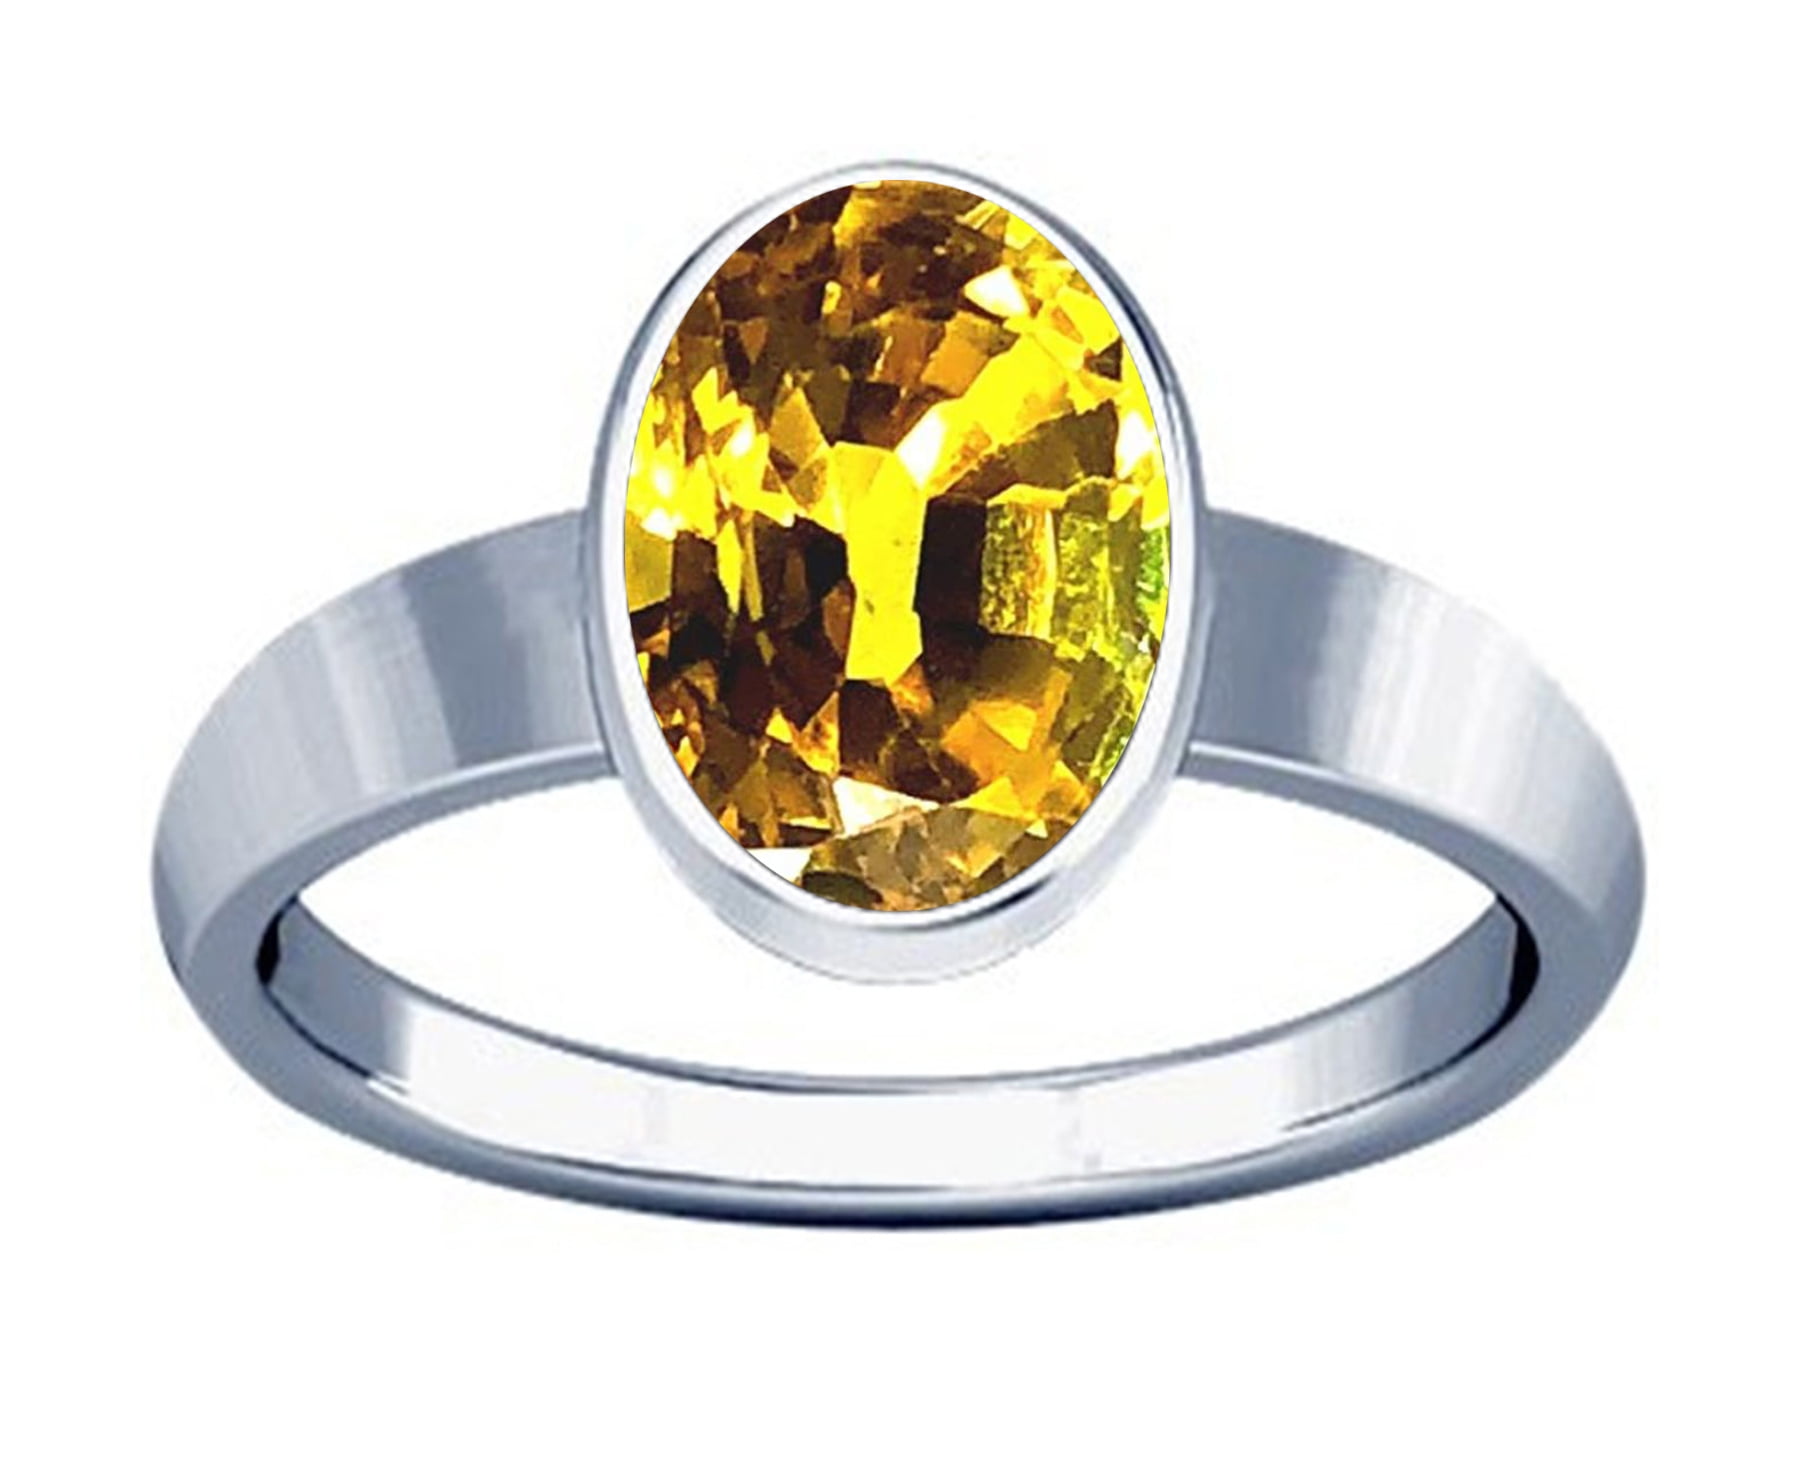 Buy SIDHGEMS 11.25 Ratti 10.55 Carat Natural Yellow Sapphire Pukhraj Stone  Panchdhatu Adjustable Silver Ring for Men and Women at Amazon.in